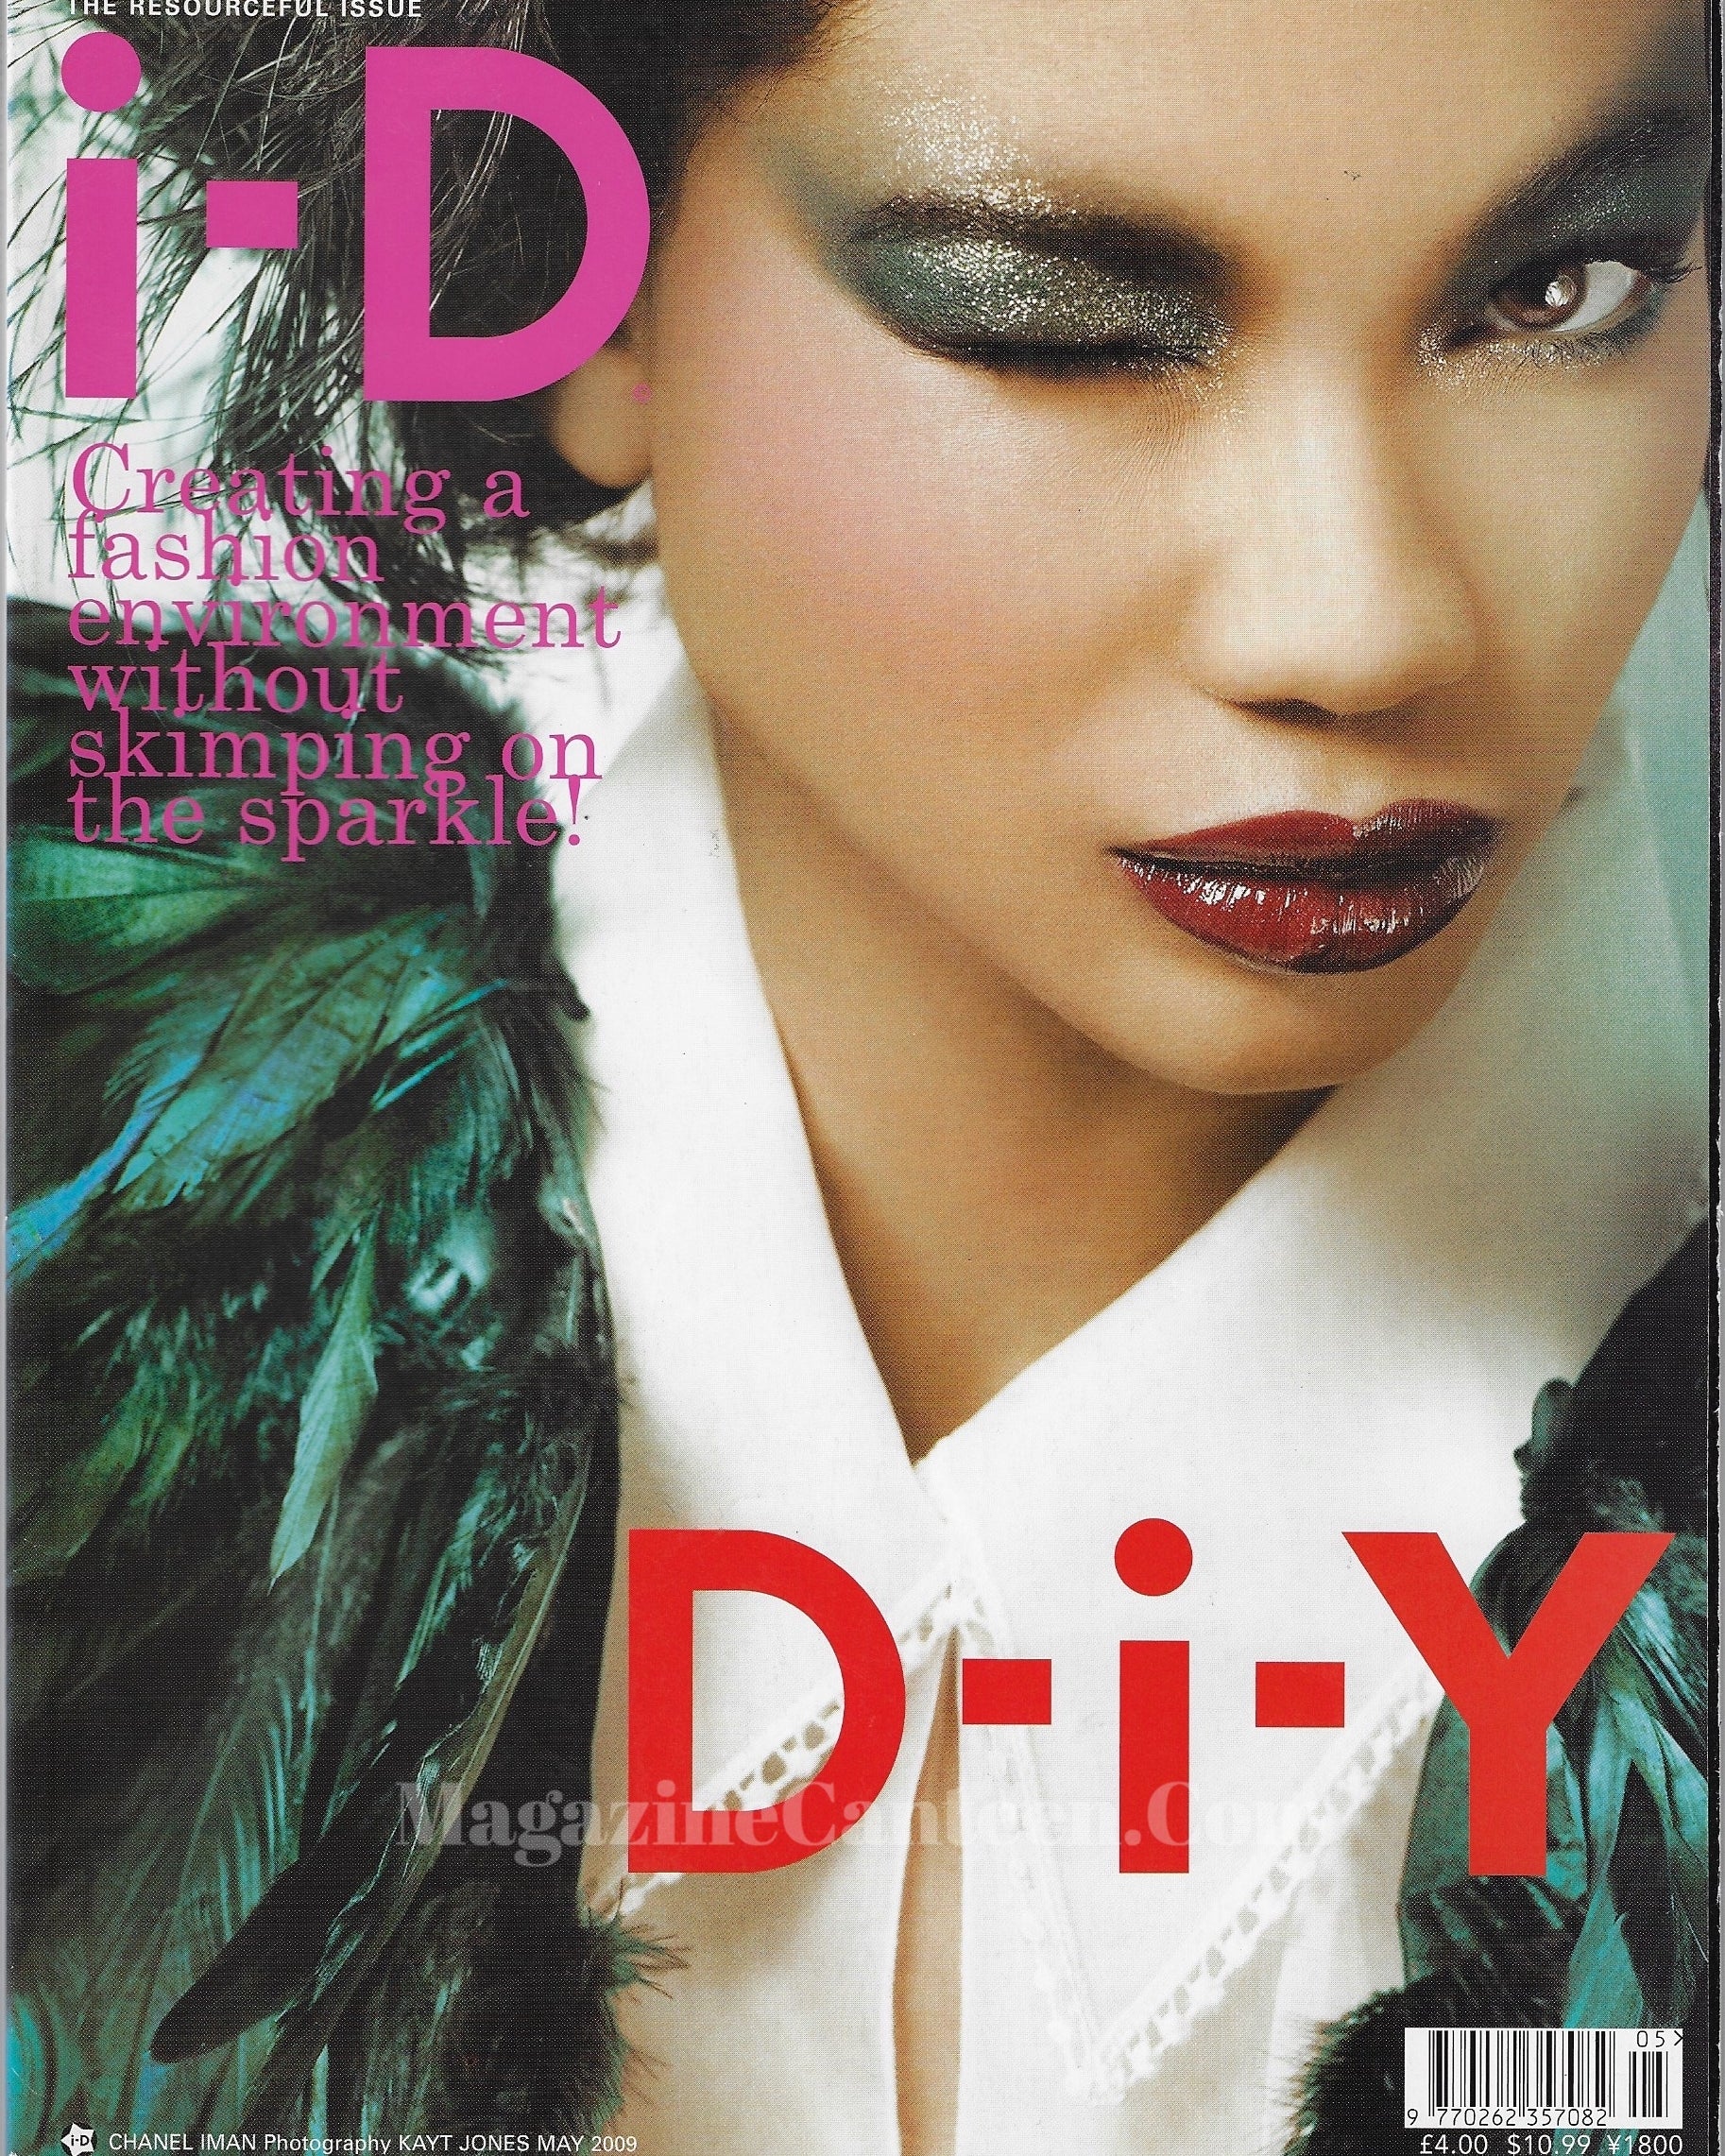 I-D Magazine 299 - Chanel Iman 2009